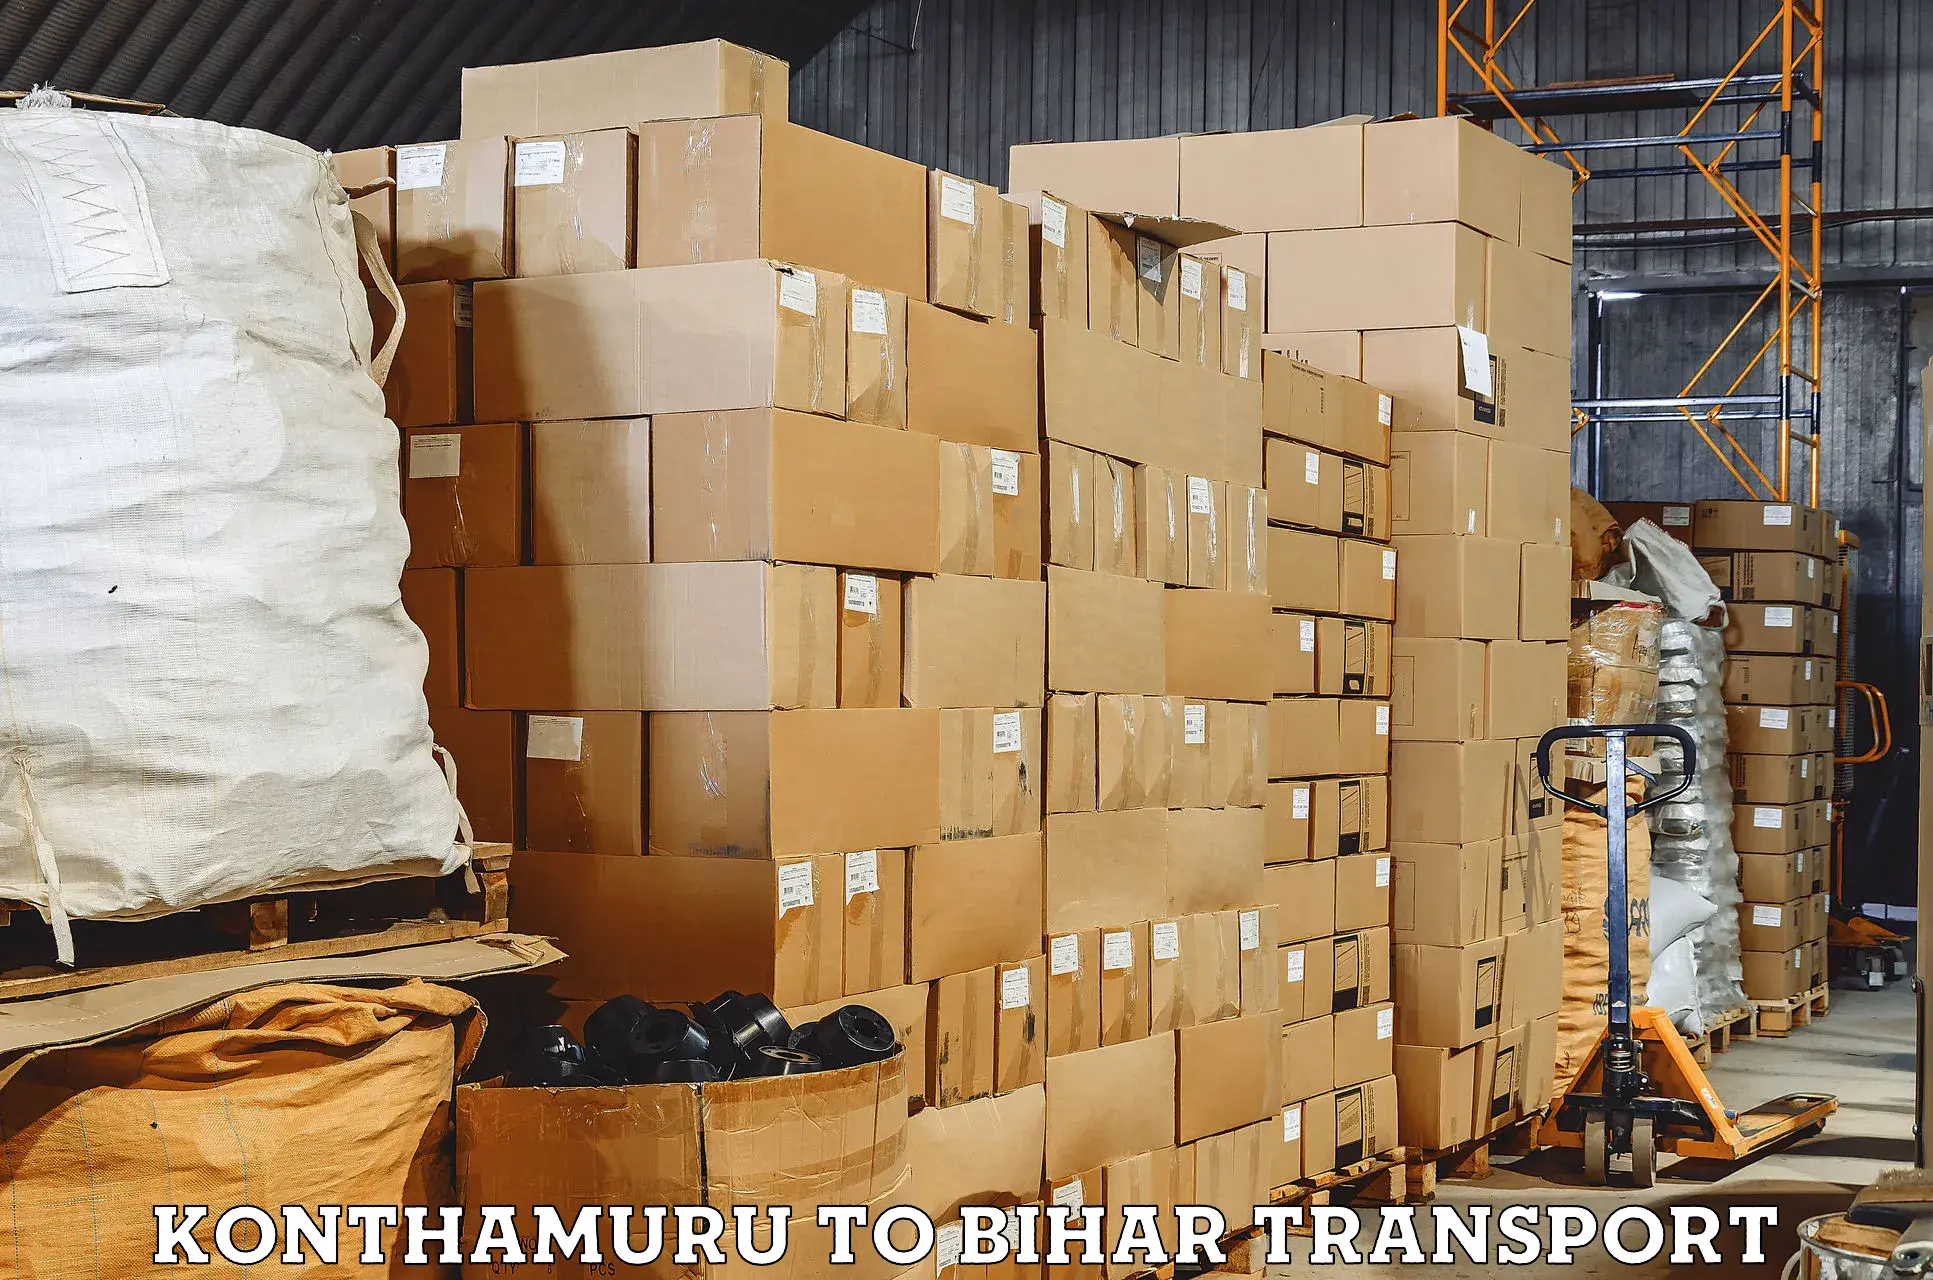 Vehicle transport services in Konthamuru to Hasanpura